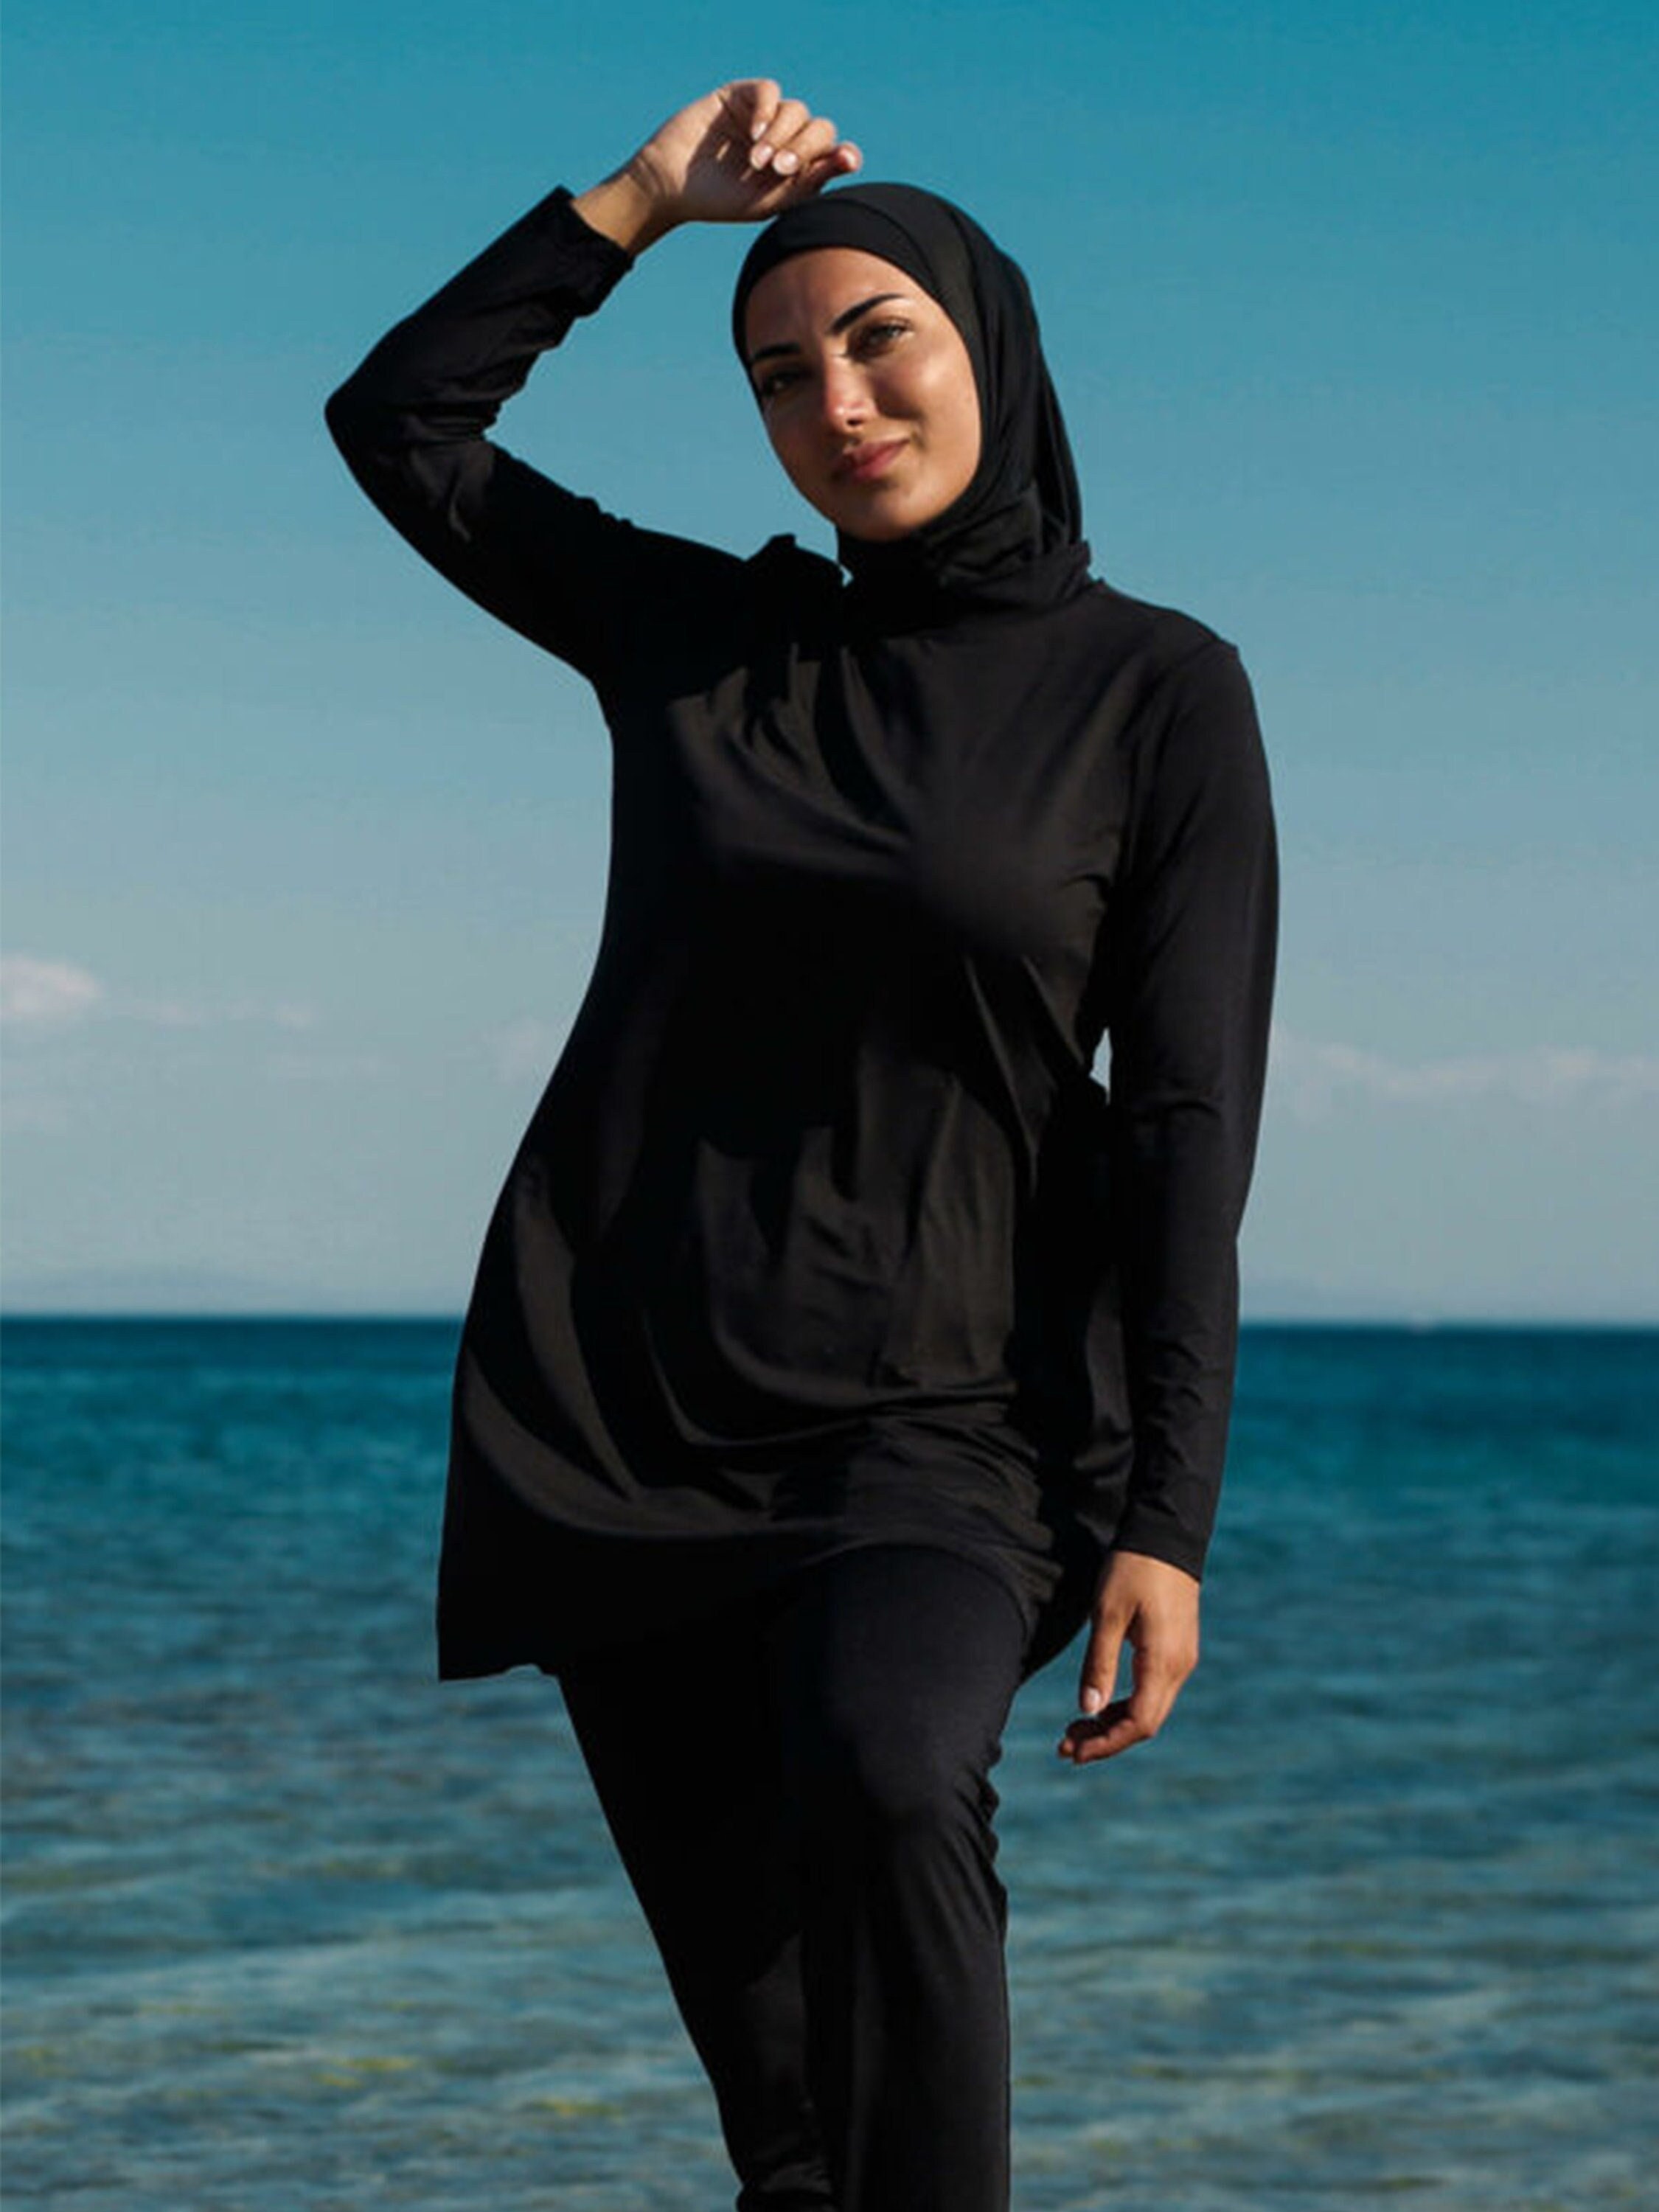 Modest Swimsuit for Women Muslim Women Hijab Swimsuit Full pic